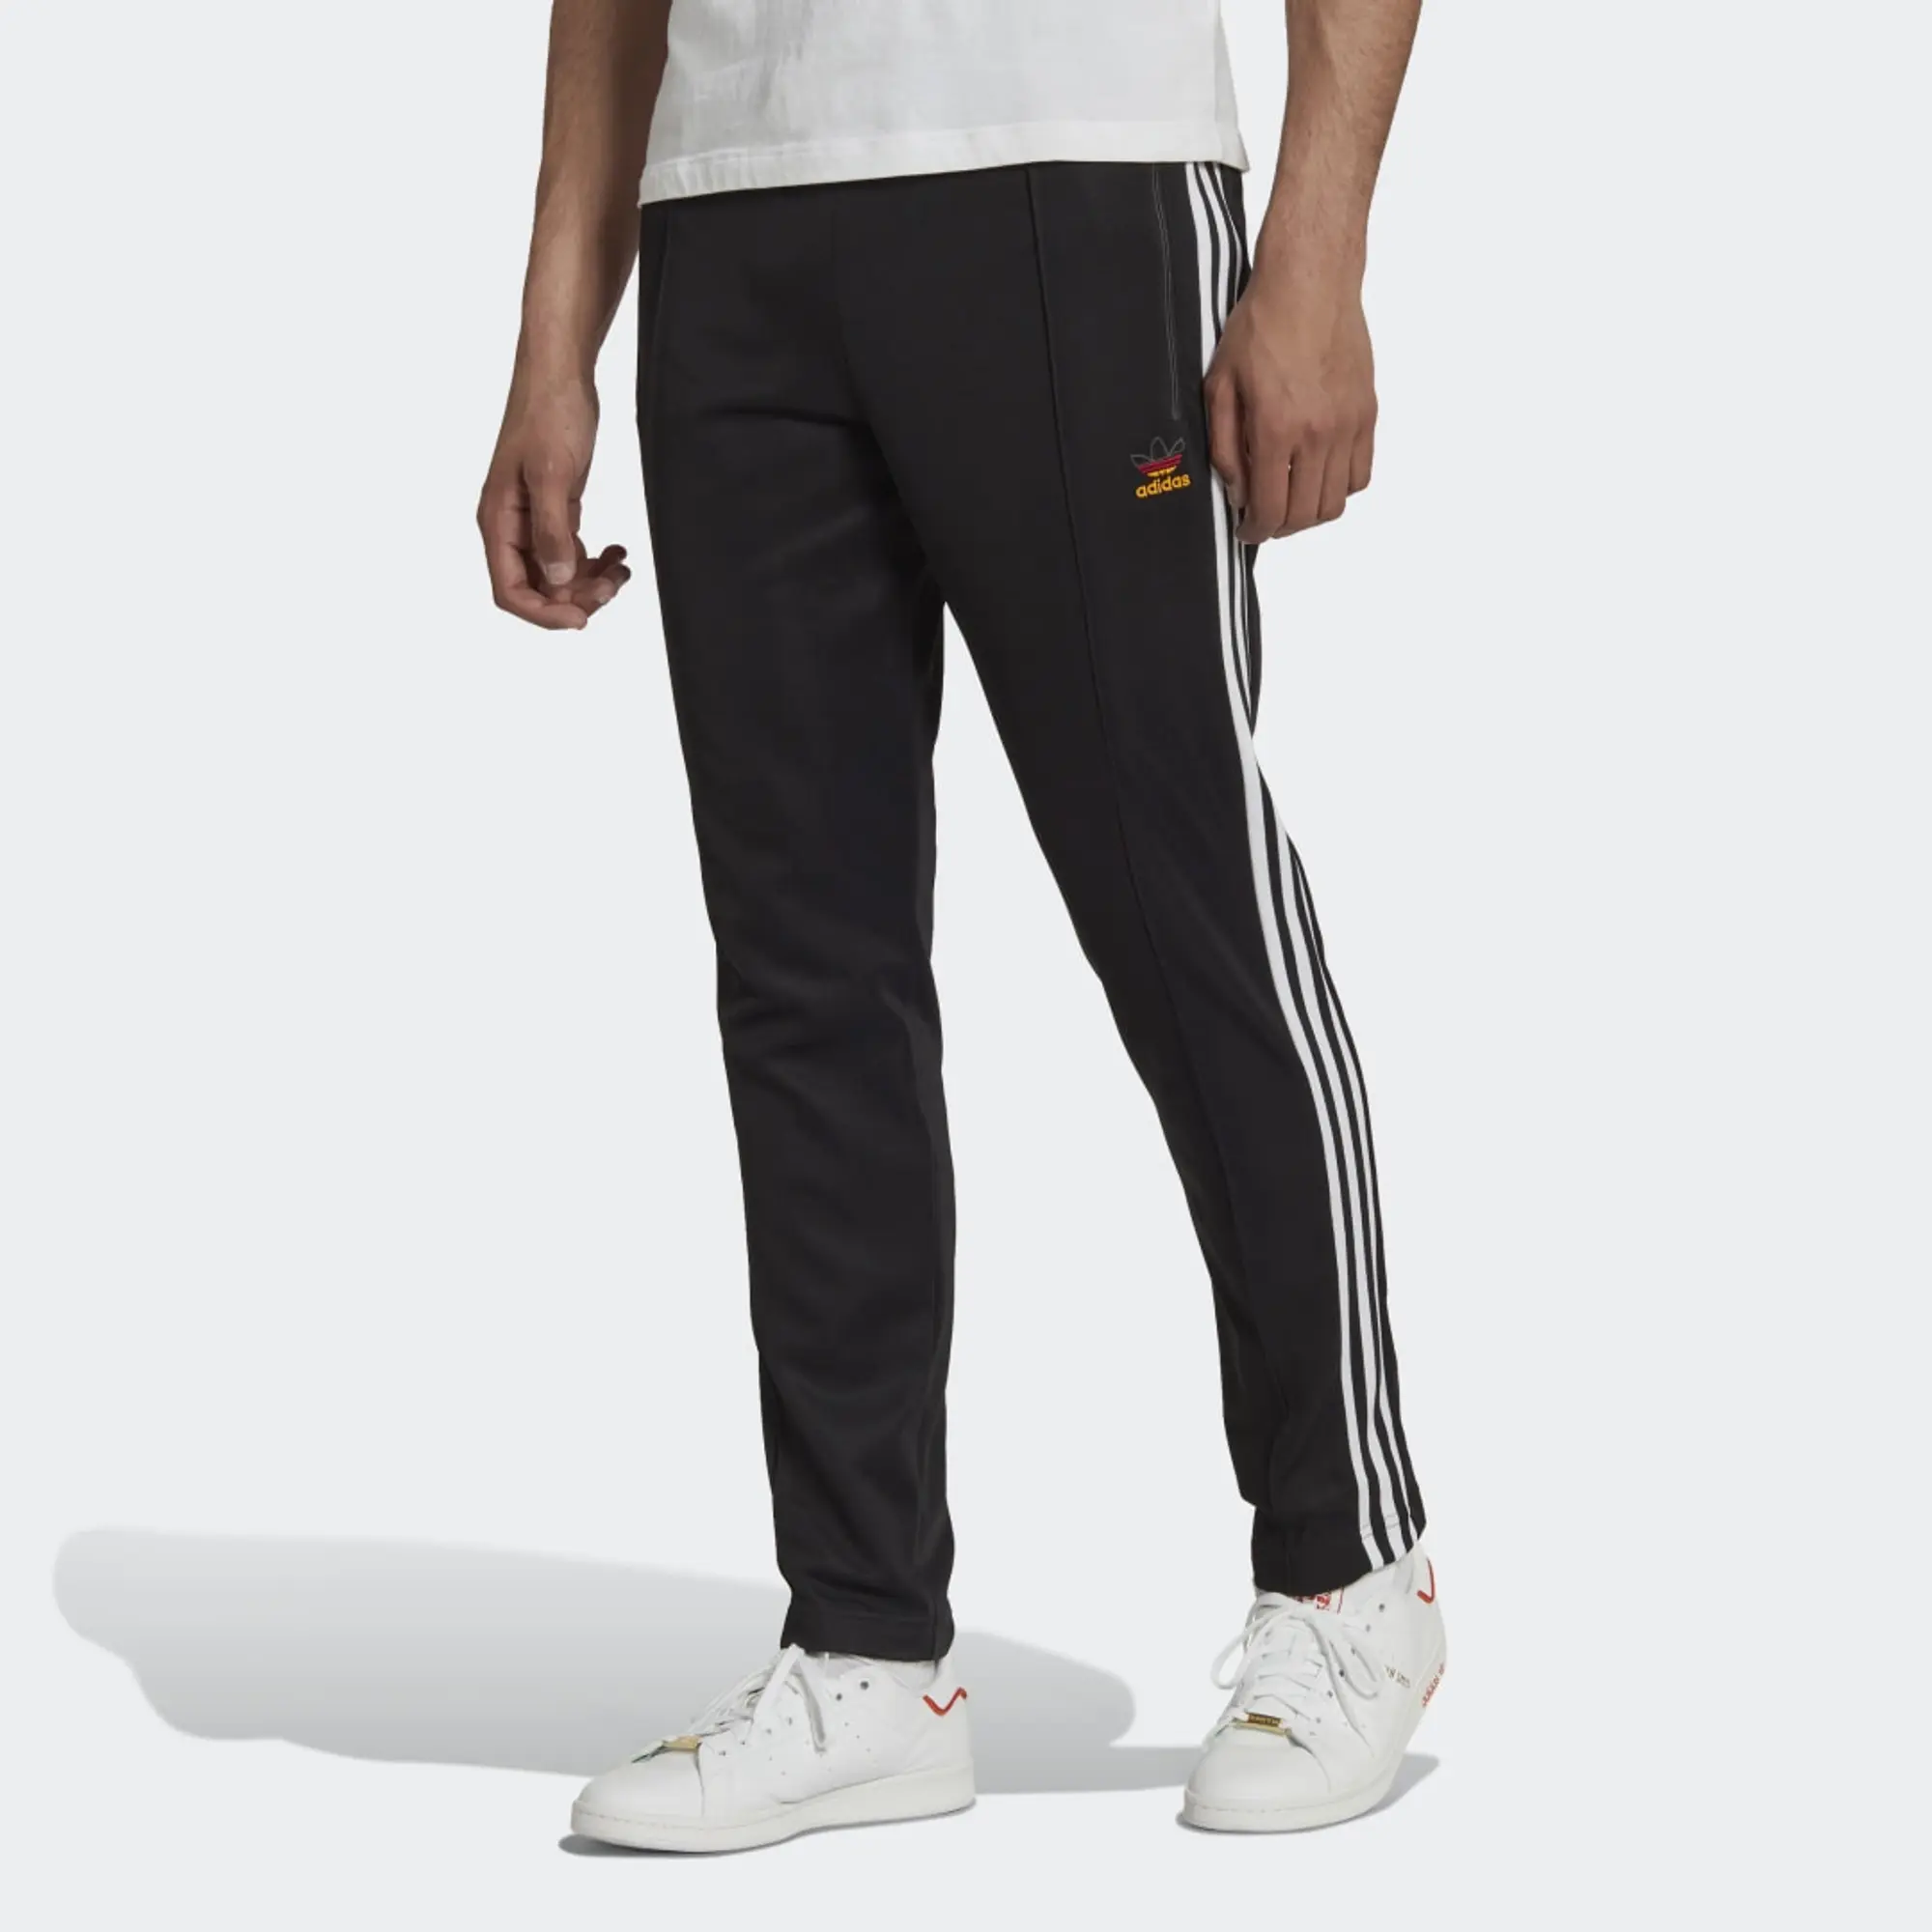 Adidas 3 Stripe 'Germany' Track Pant Black/White/Red